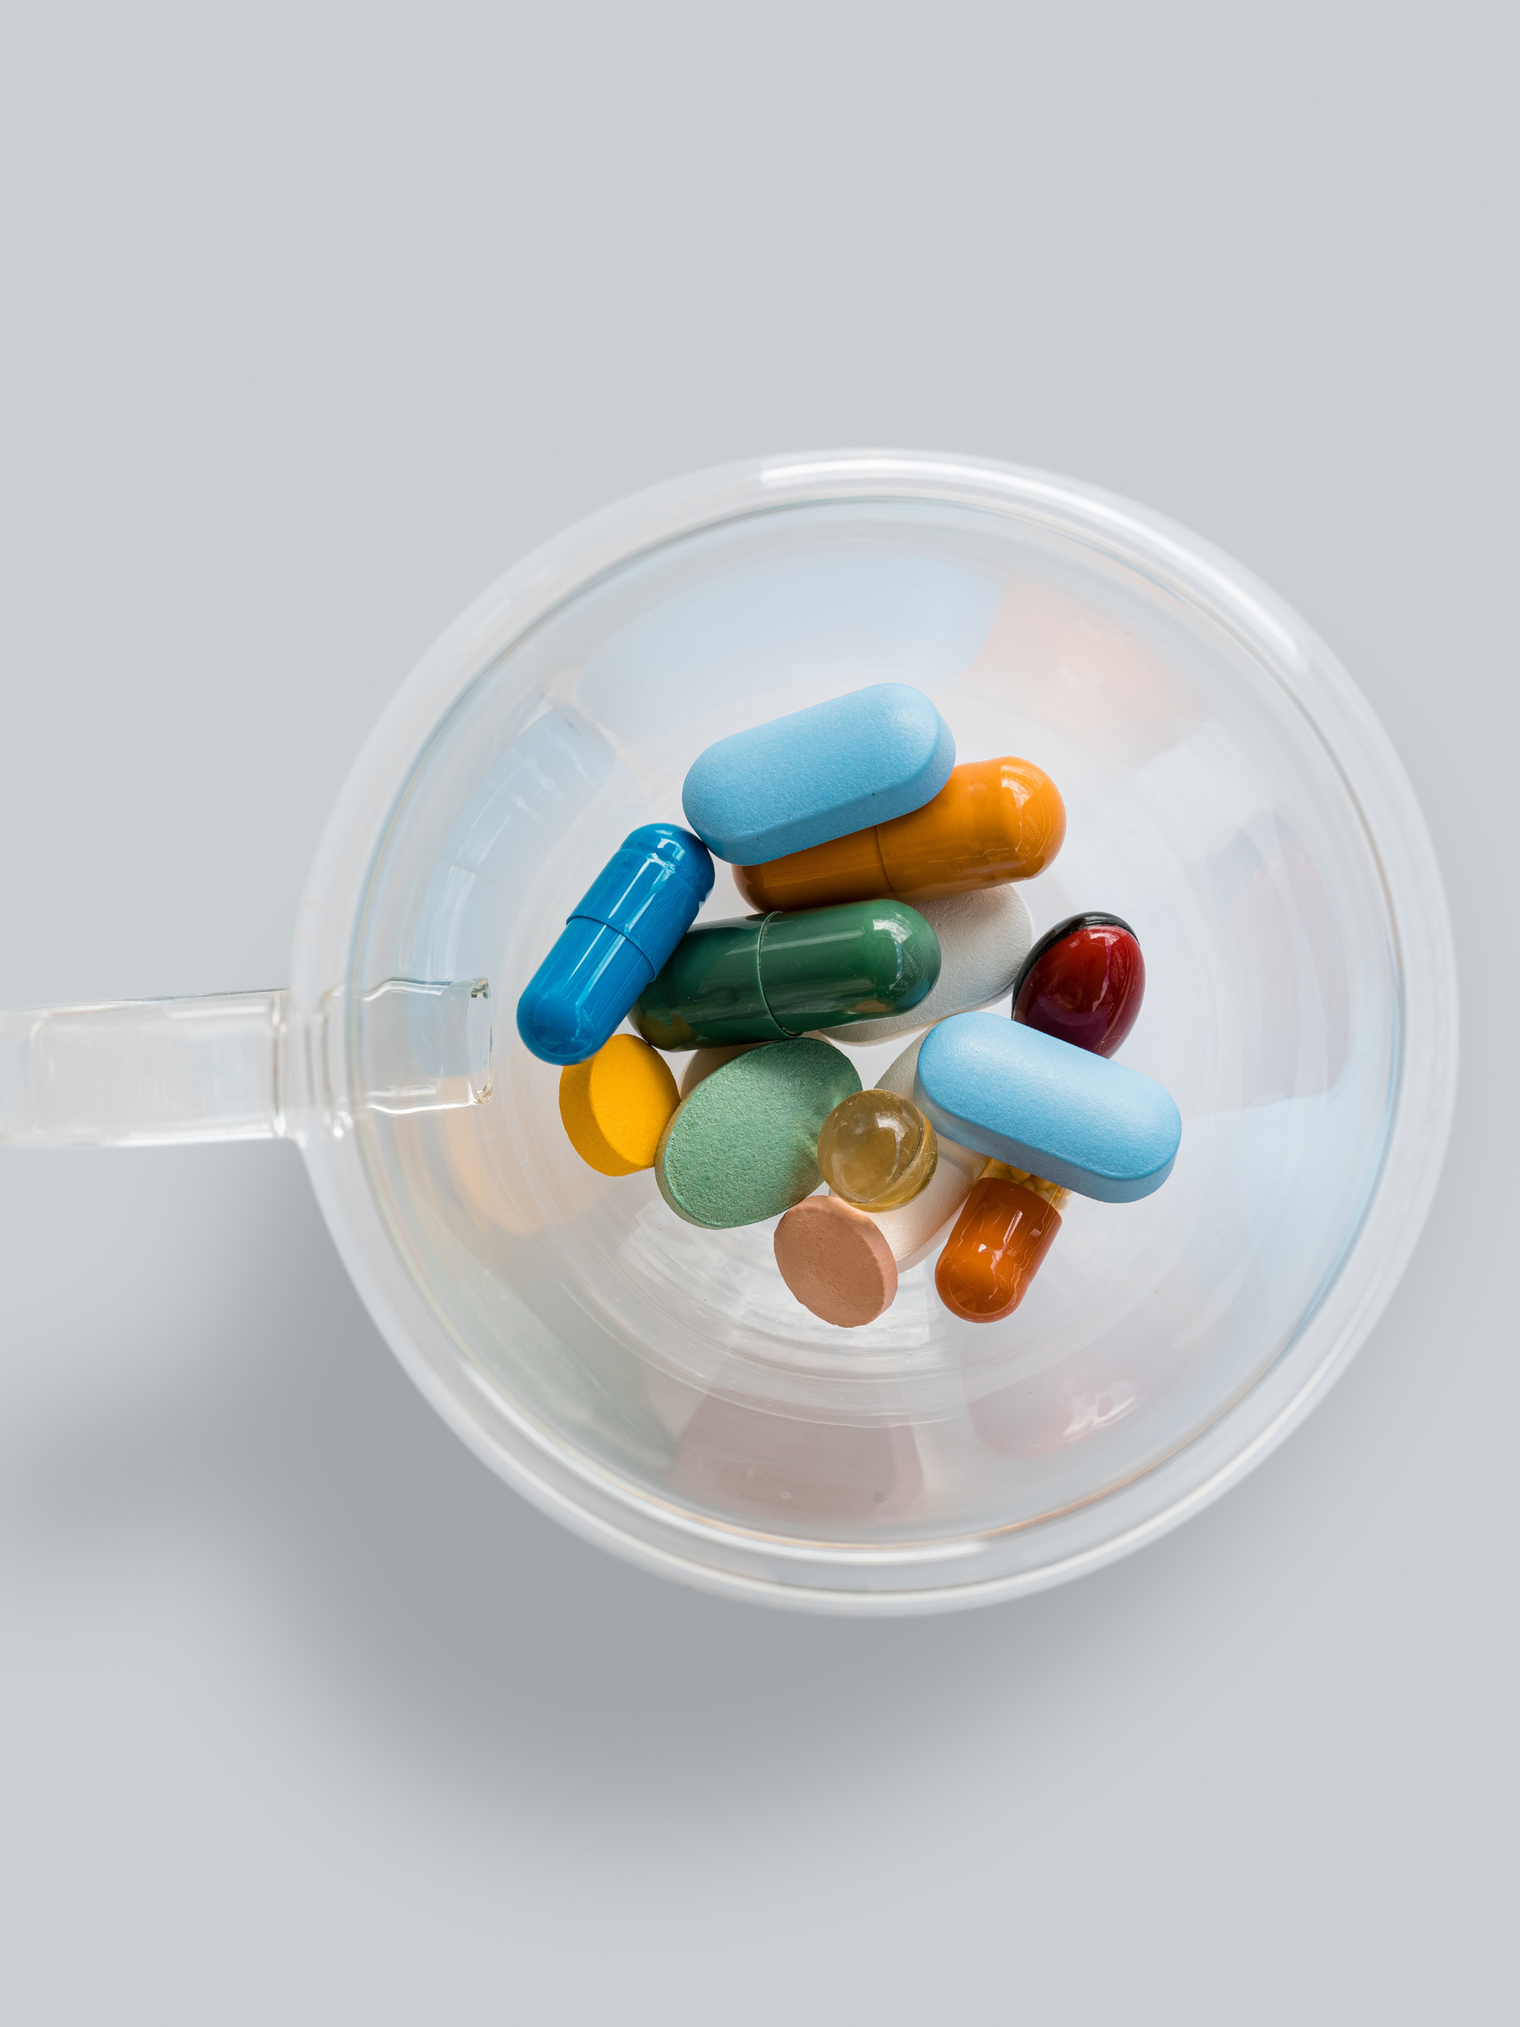 What do antibiotics do to your gut heath?